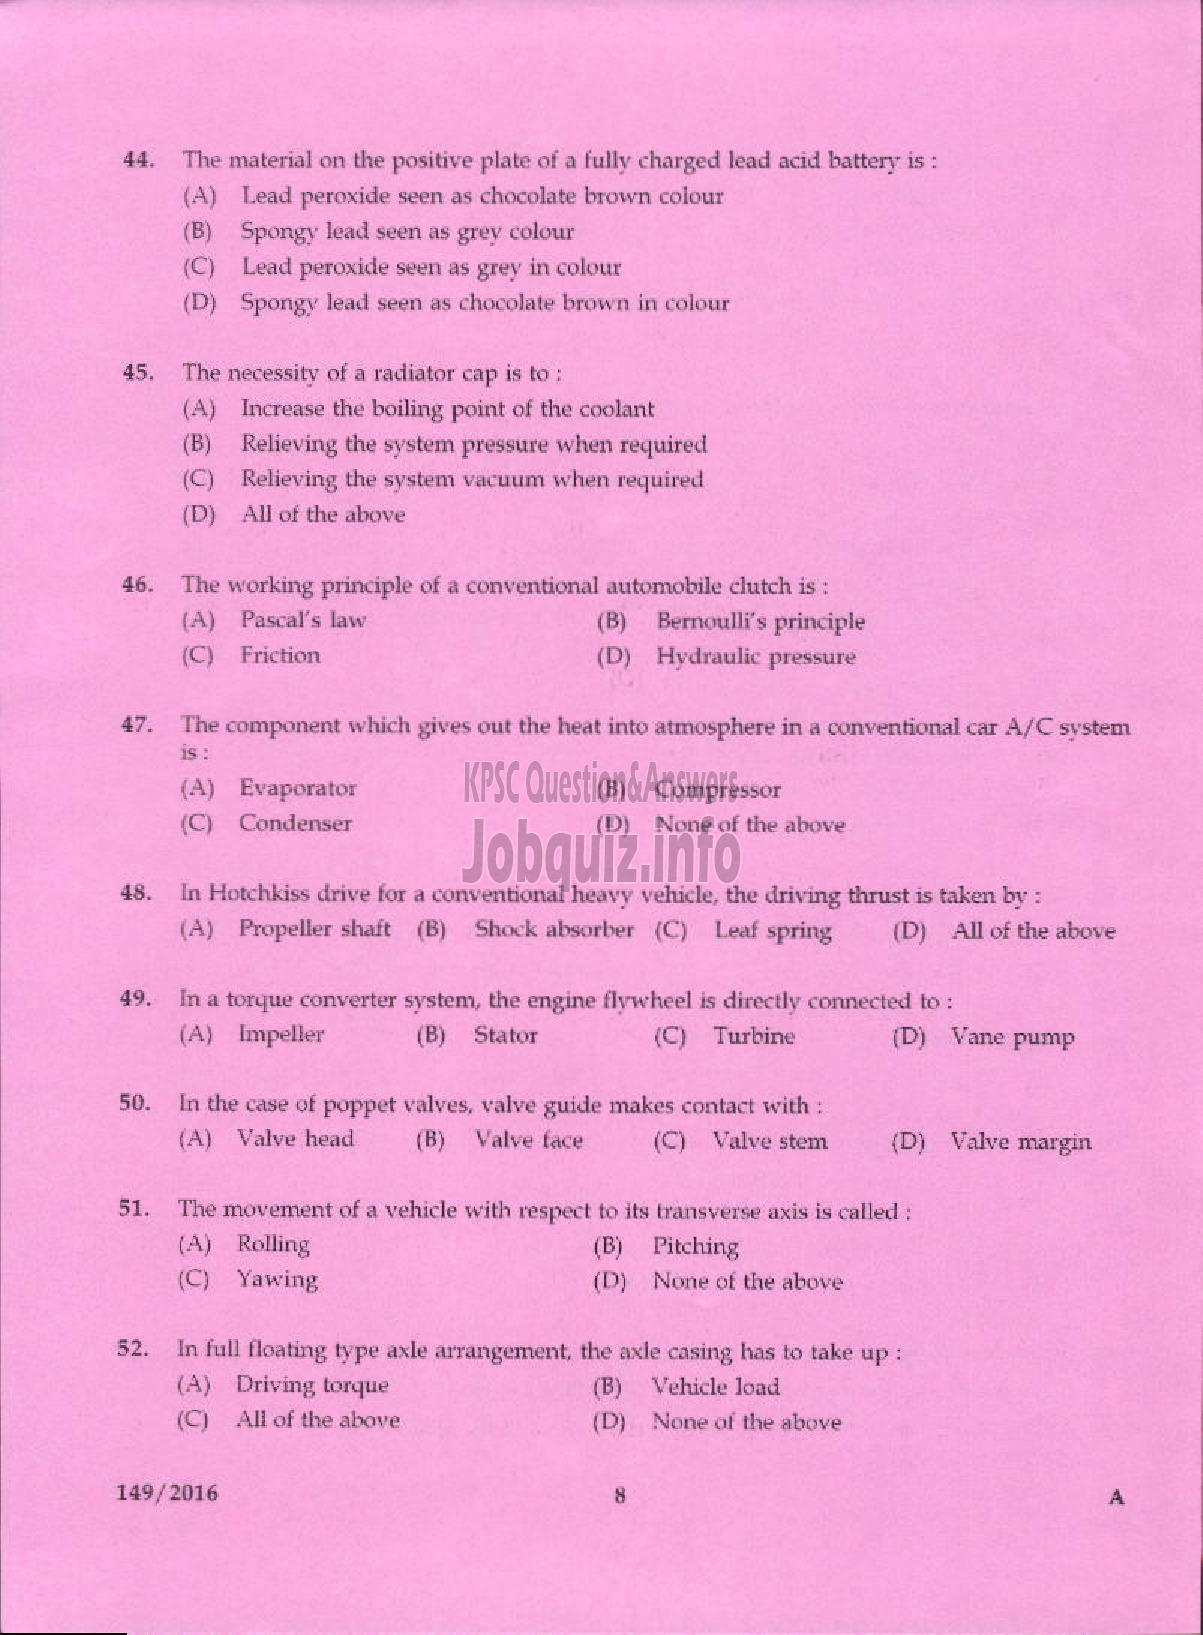 Kerala PSC Question Paper - VOCATIONAL TEACHER MAINTENANCE AND REPAIRS OF AUTOMOBILES KVHSE-6